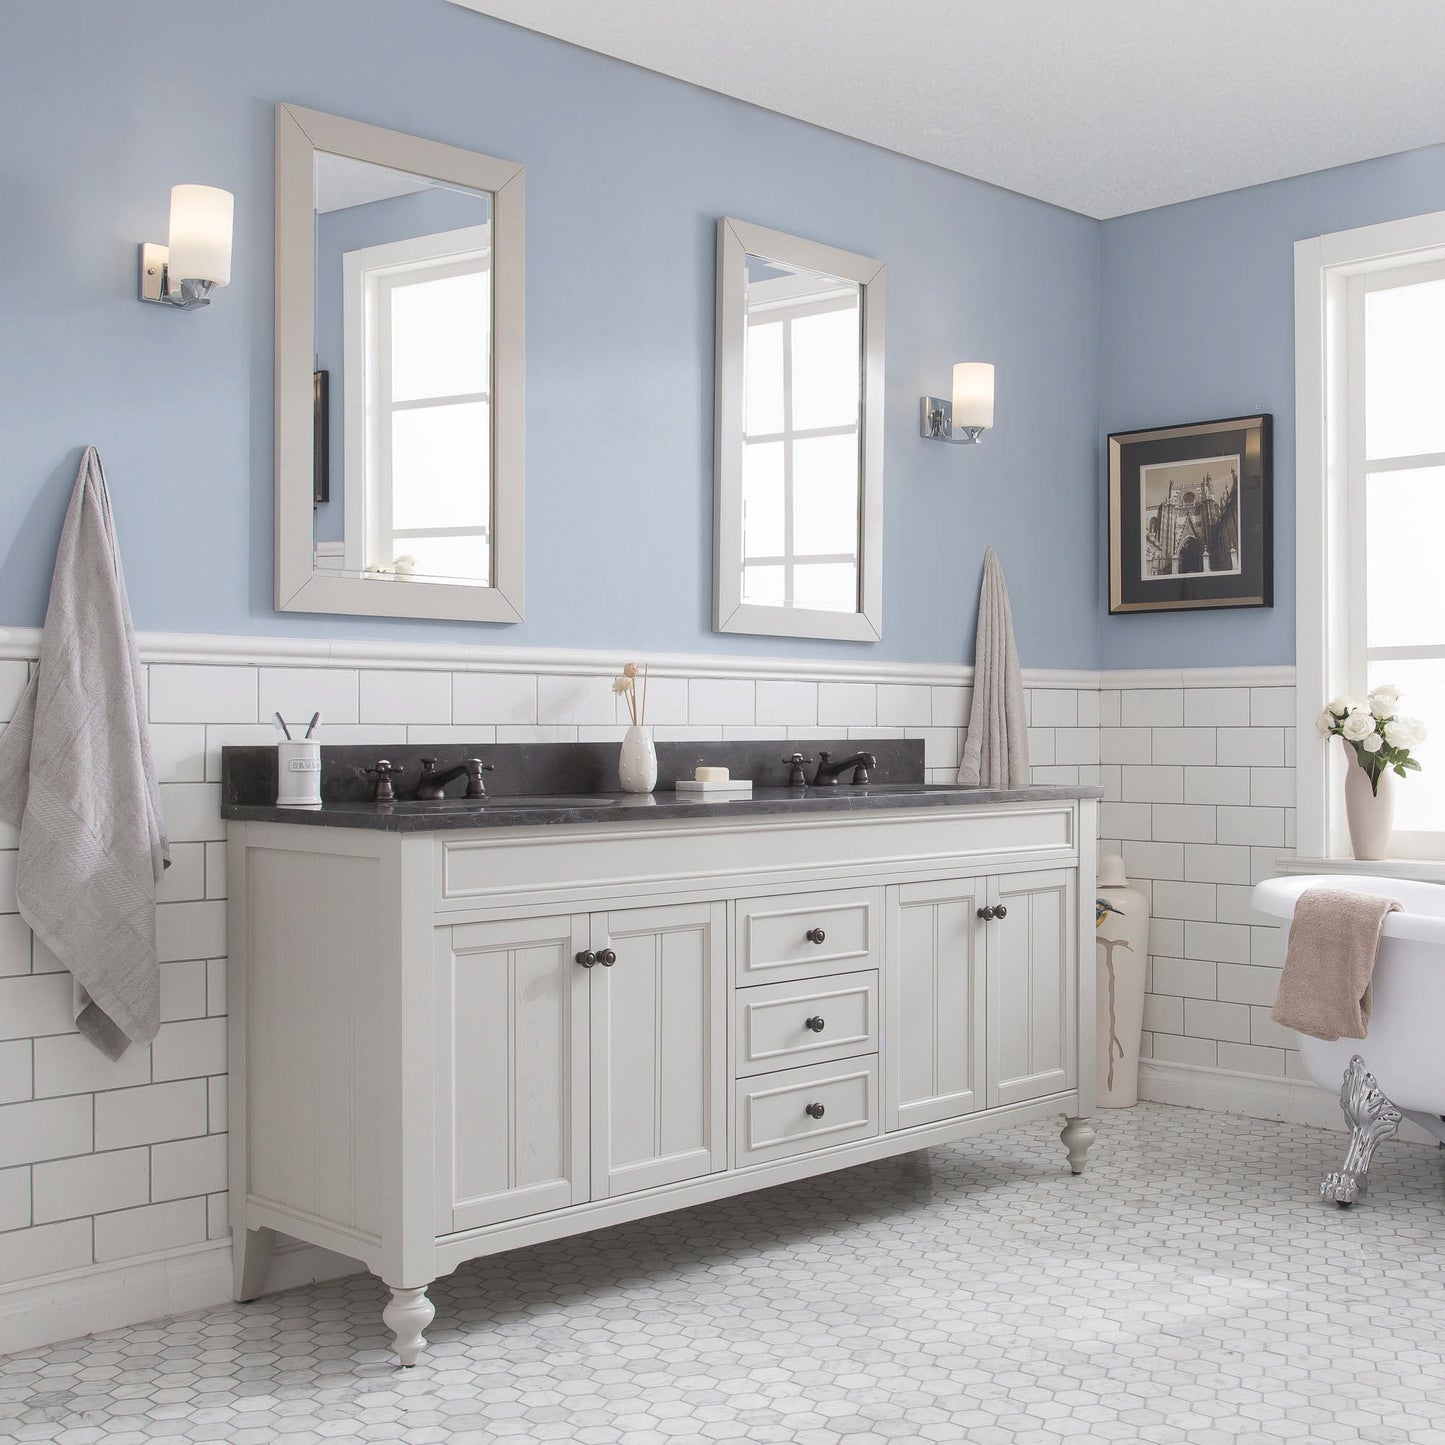 Water Creation Potenza 72" Bathroom Vanity in Earl Grey with Blue Limestone Top and Faucet - Luxe Bathroom Vanities